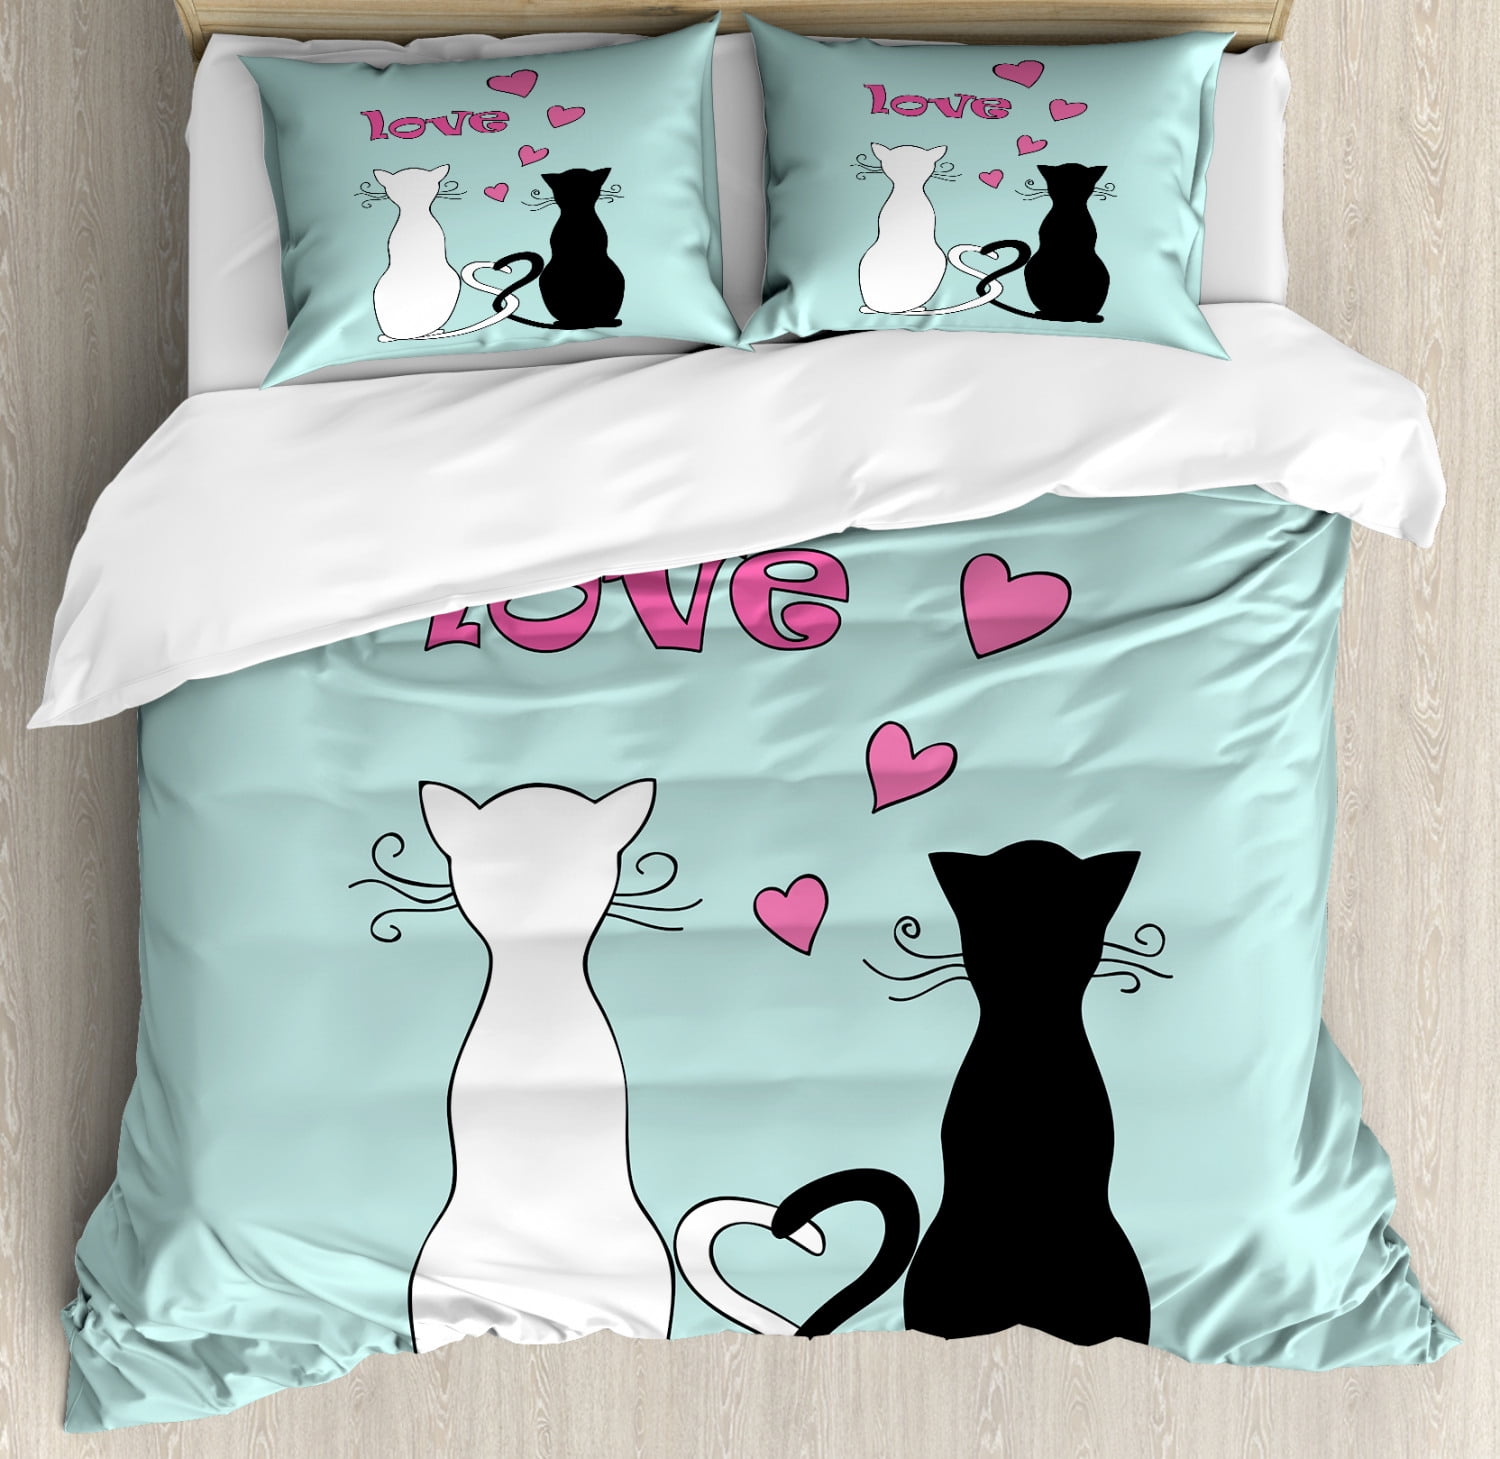 Cat King Size Duvet Cover Set Black And White Kitty Cat Couple